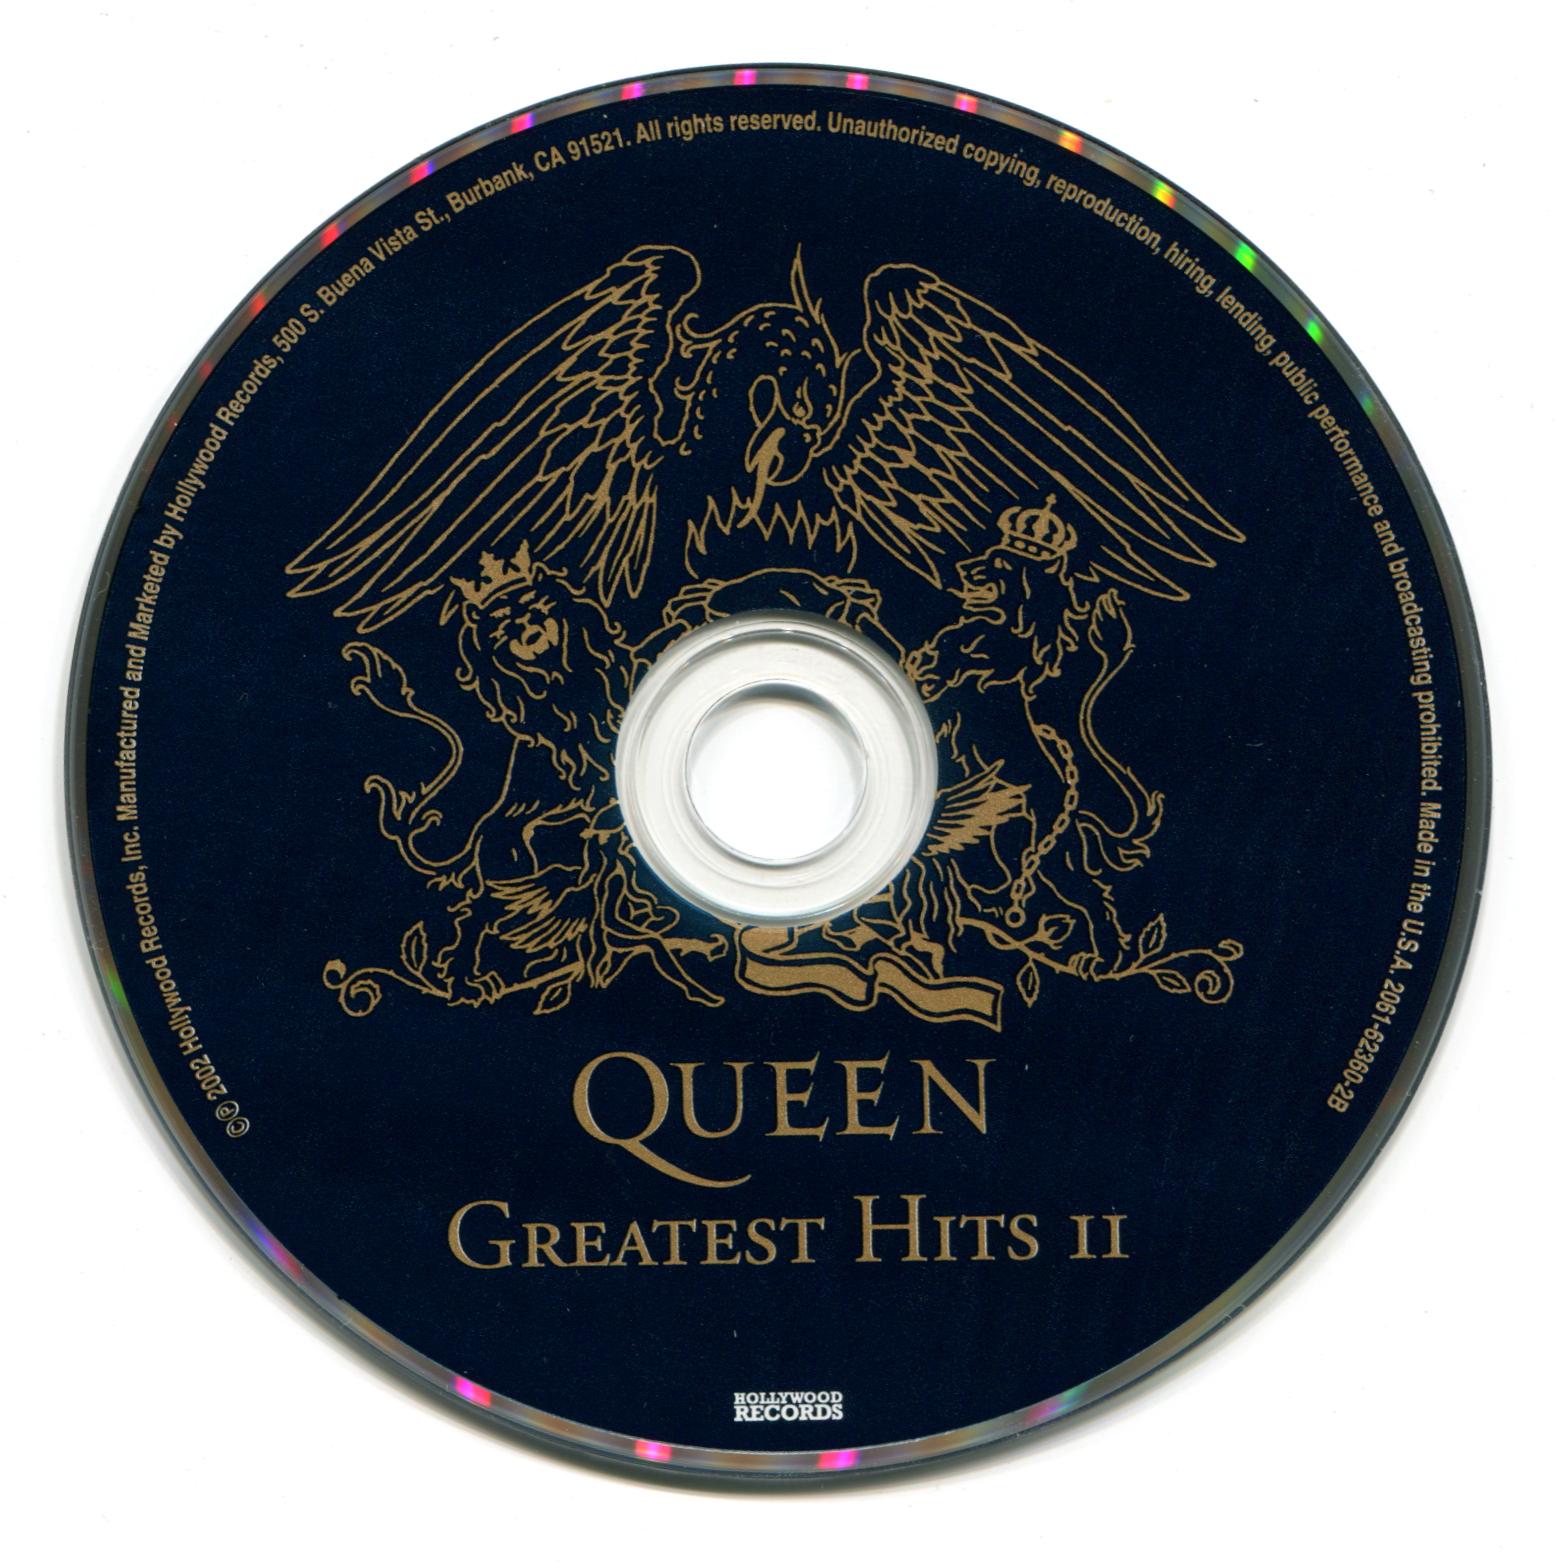 Альбом песен королева. Queen Greatest Hits 1 2 3 Platinum collection. "The Greatest Hits" Queen Касетта обложка. Компакт-диск Warner Queen – Platinum collection: Greatest Hits i II & III (3cd). Queen Greatest Hits 1981 CD.